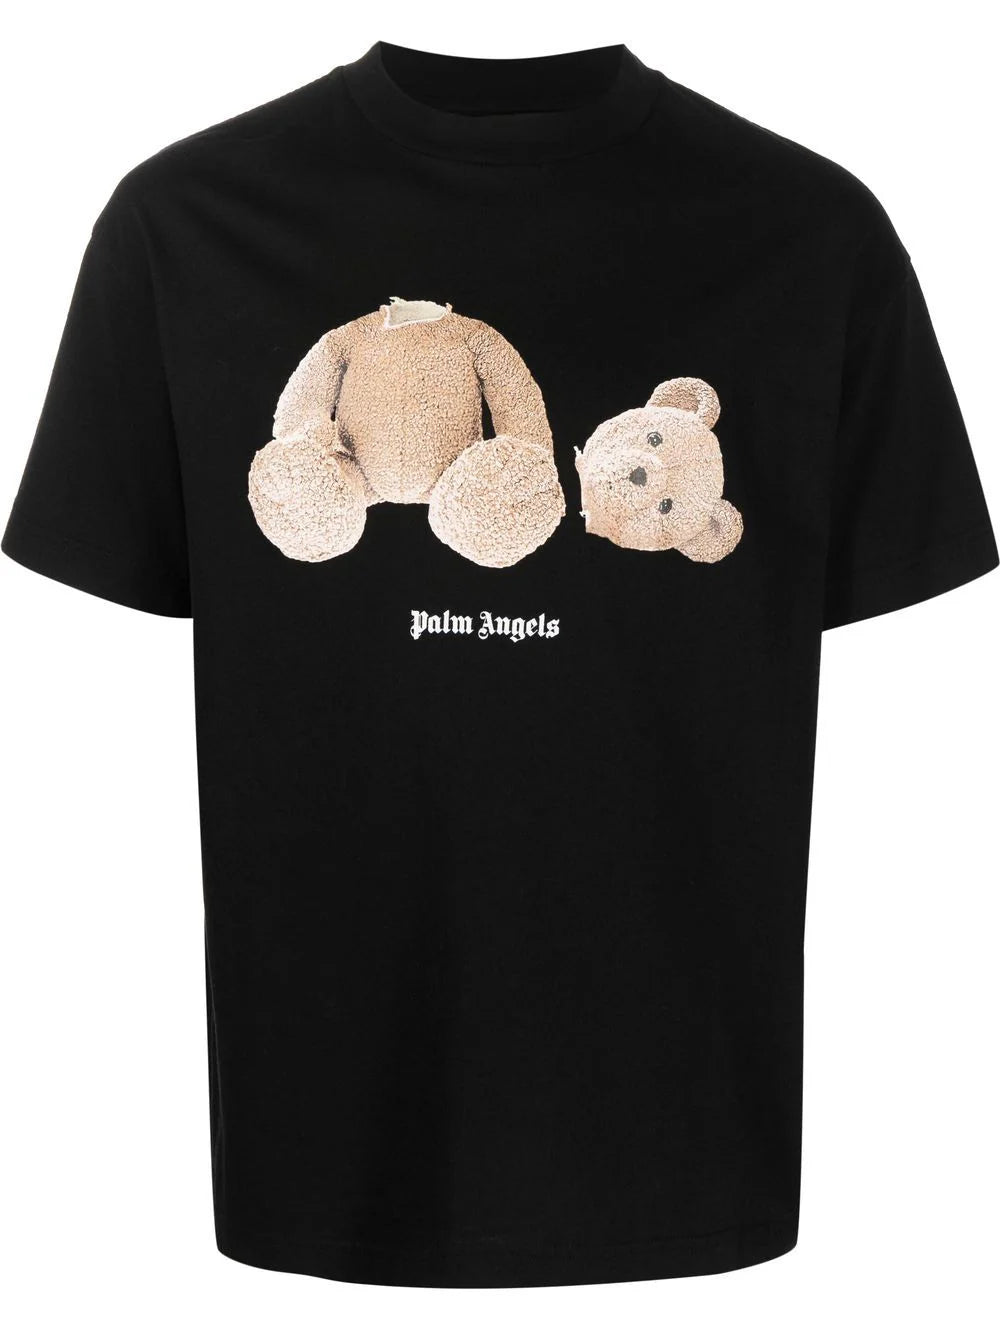 Camiseta Palm Angels Urso